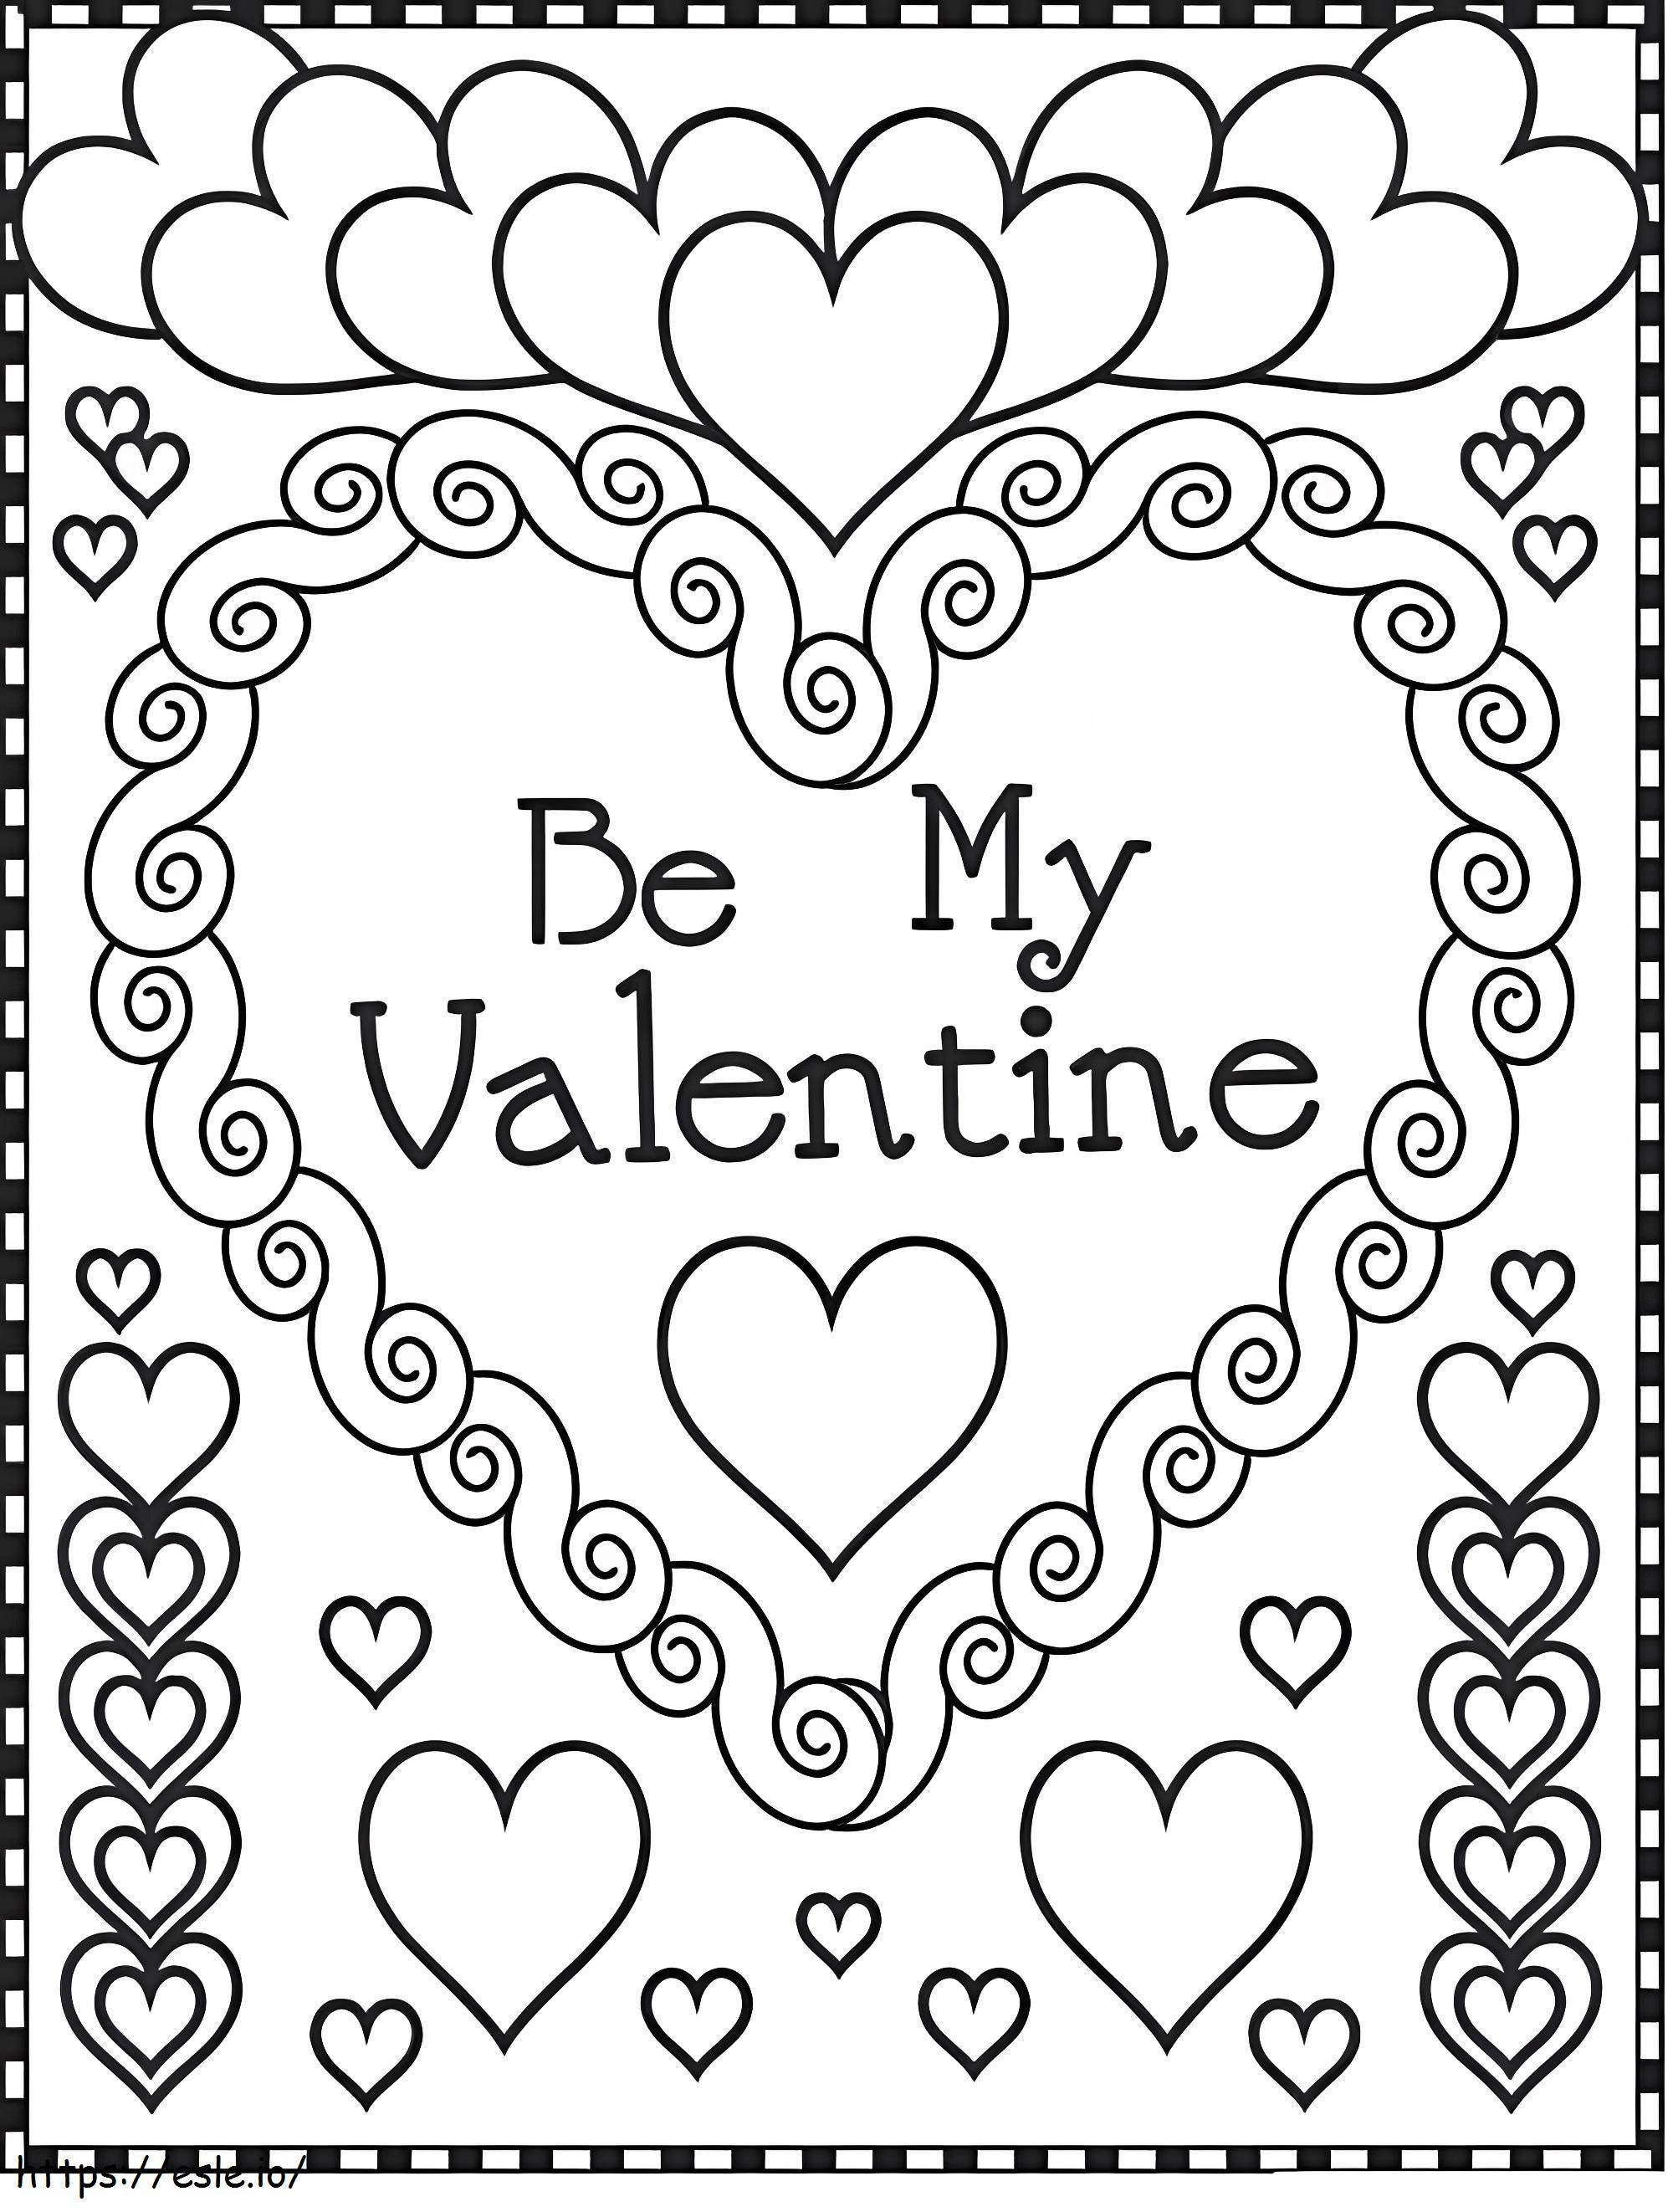 Tarjeta Be Mine Valentine Heart para colorear